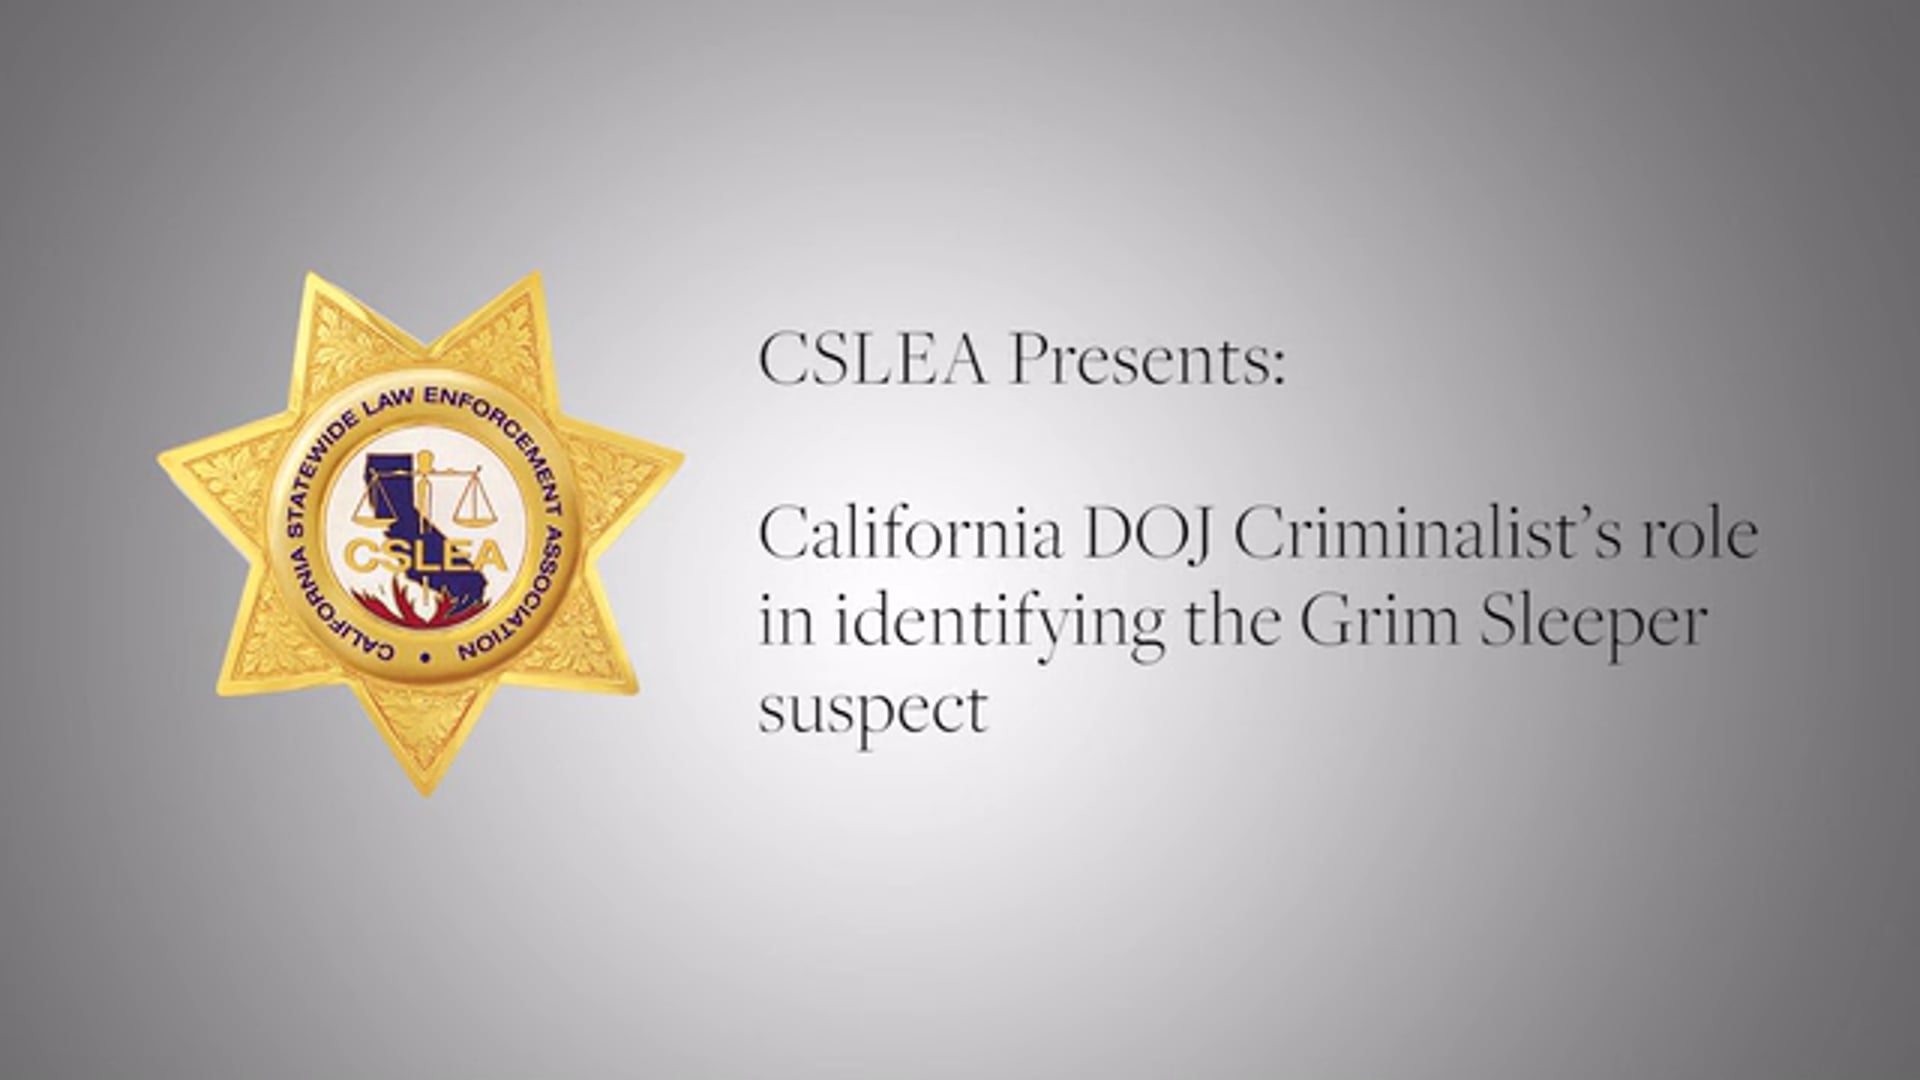 California DOJ Criminalist’s role in identifying the Grim Sleeper suspect